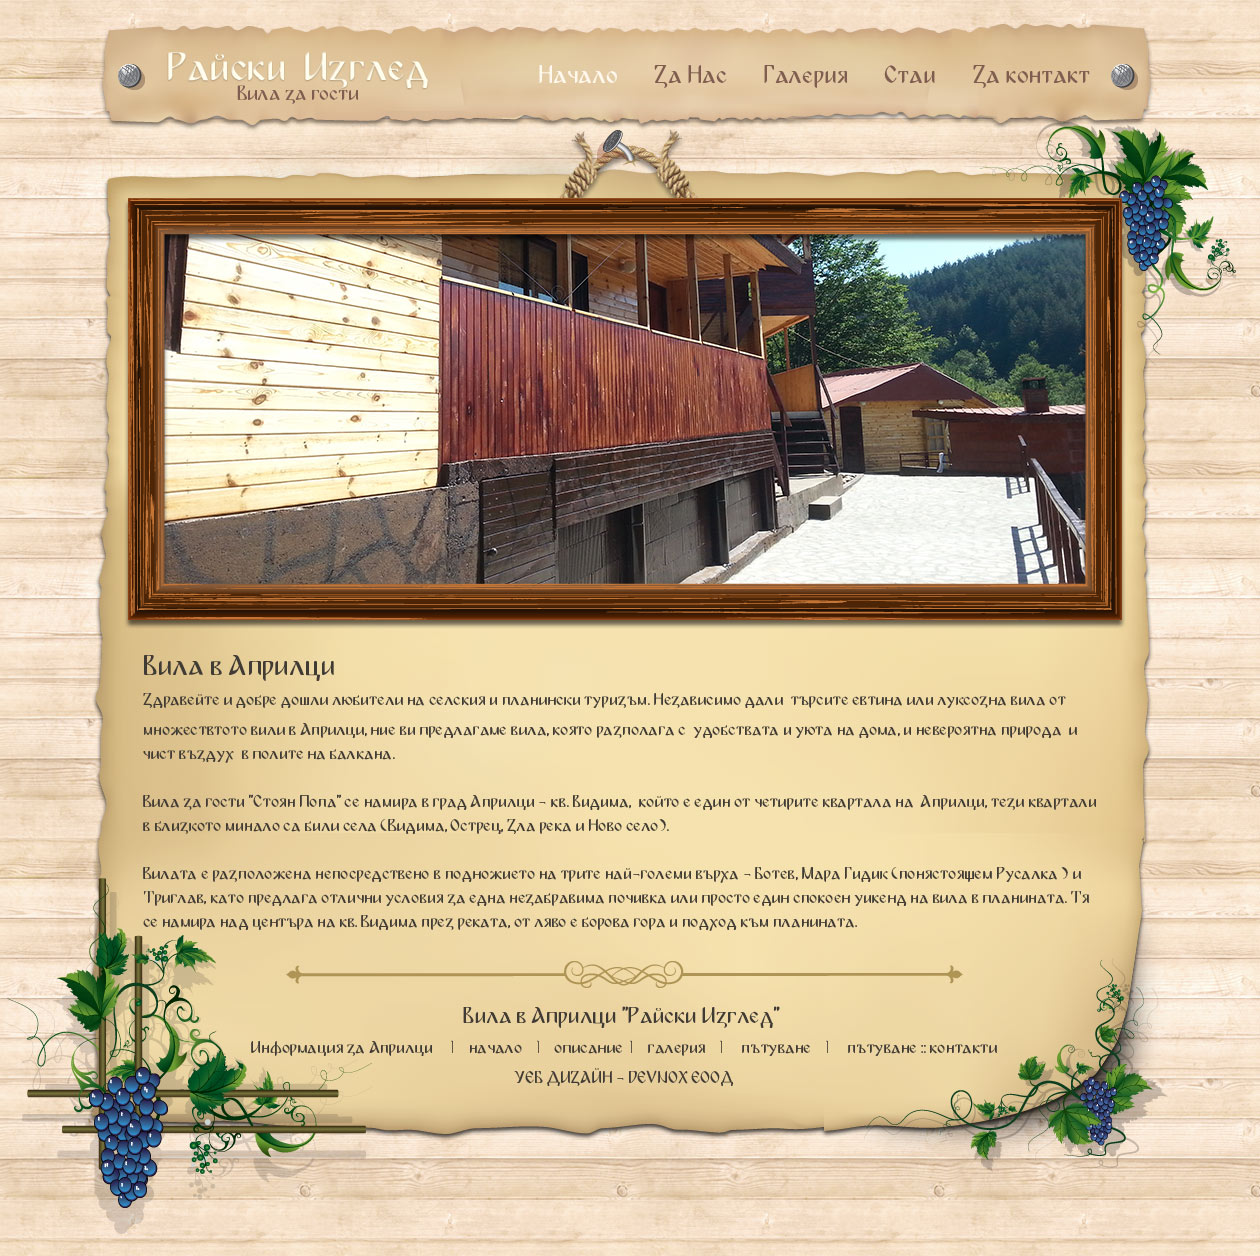 Website of holiday cottage Raiski Izgled